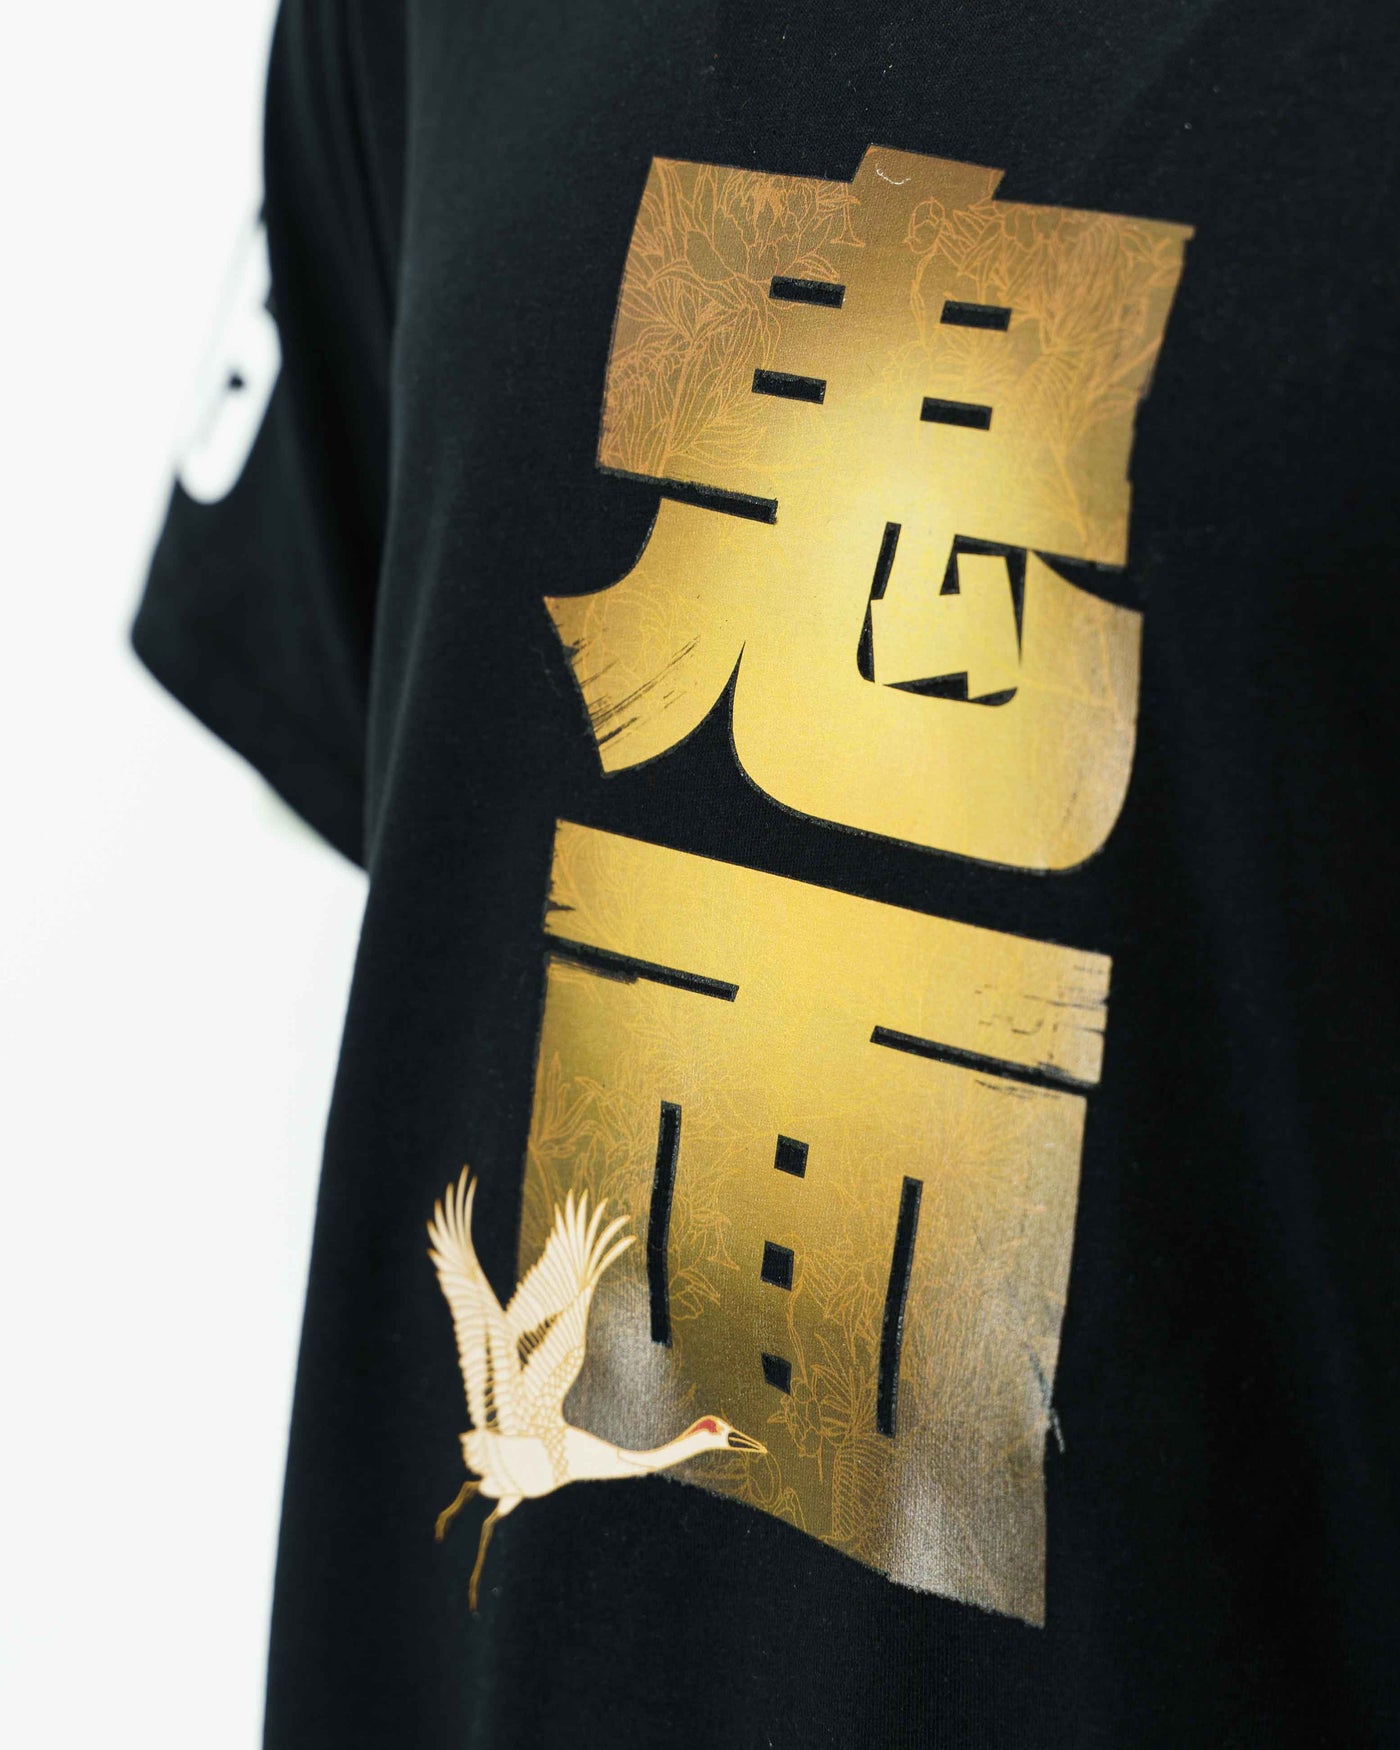 6 SIEGE Azami Black T-Shirt